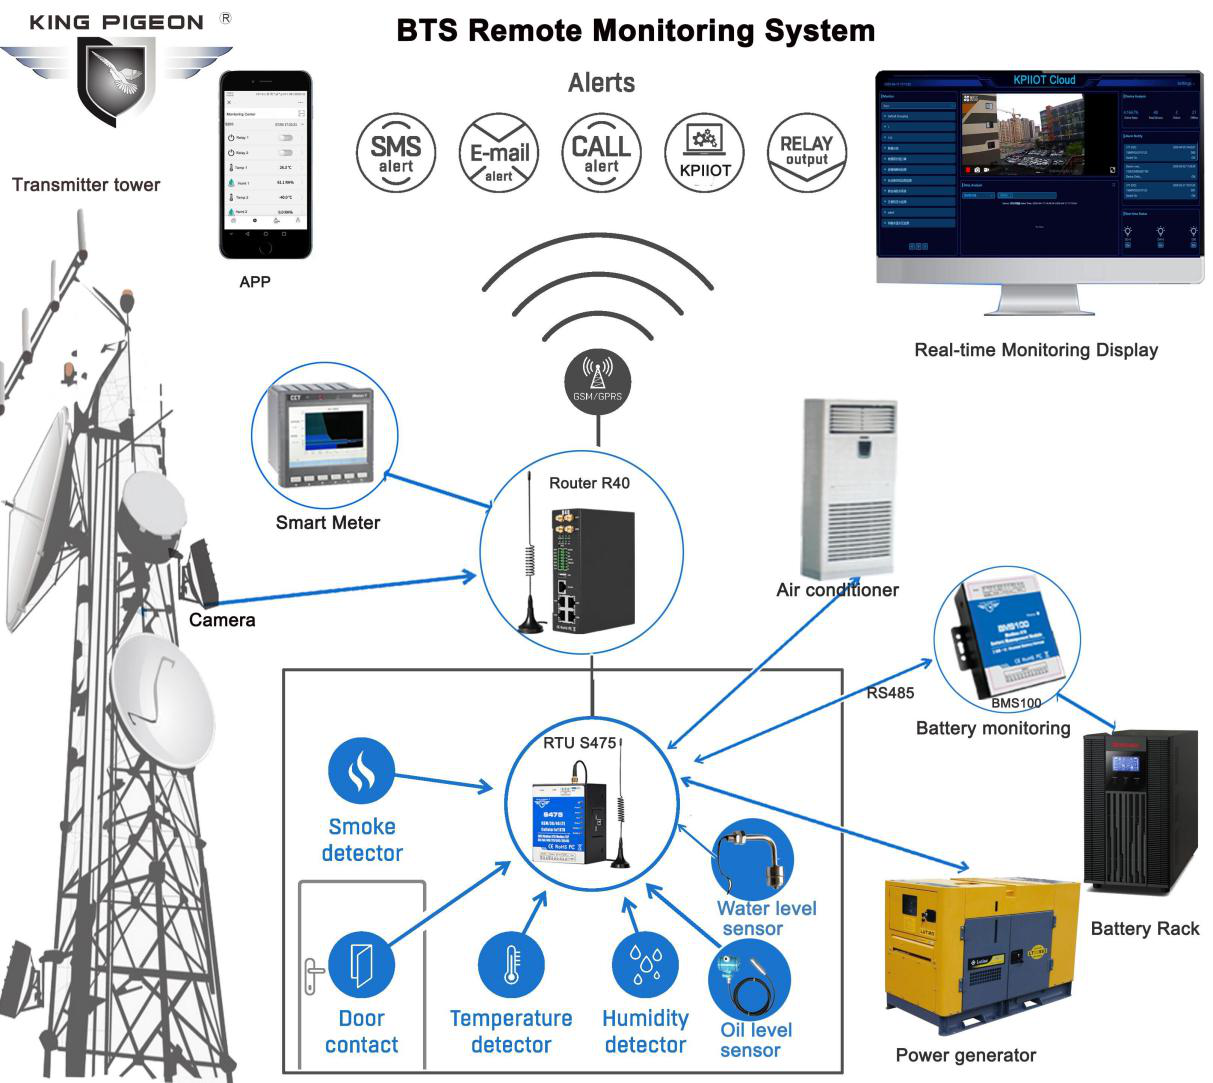 King Pigeon BTS Monitoring Stystem